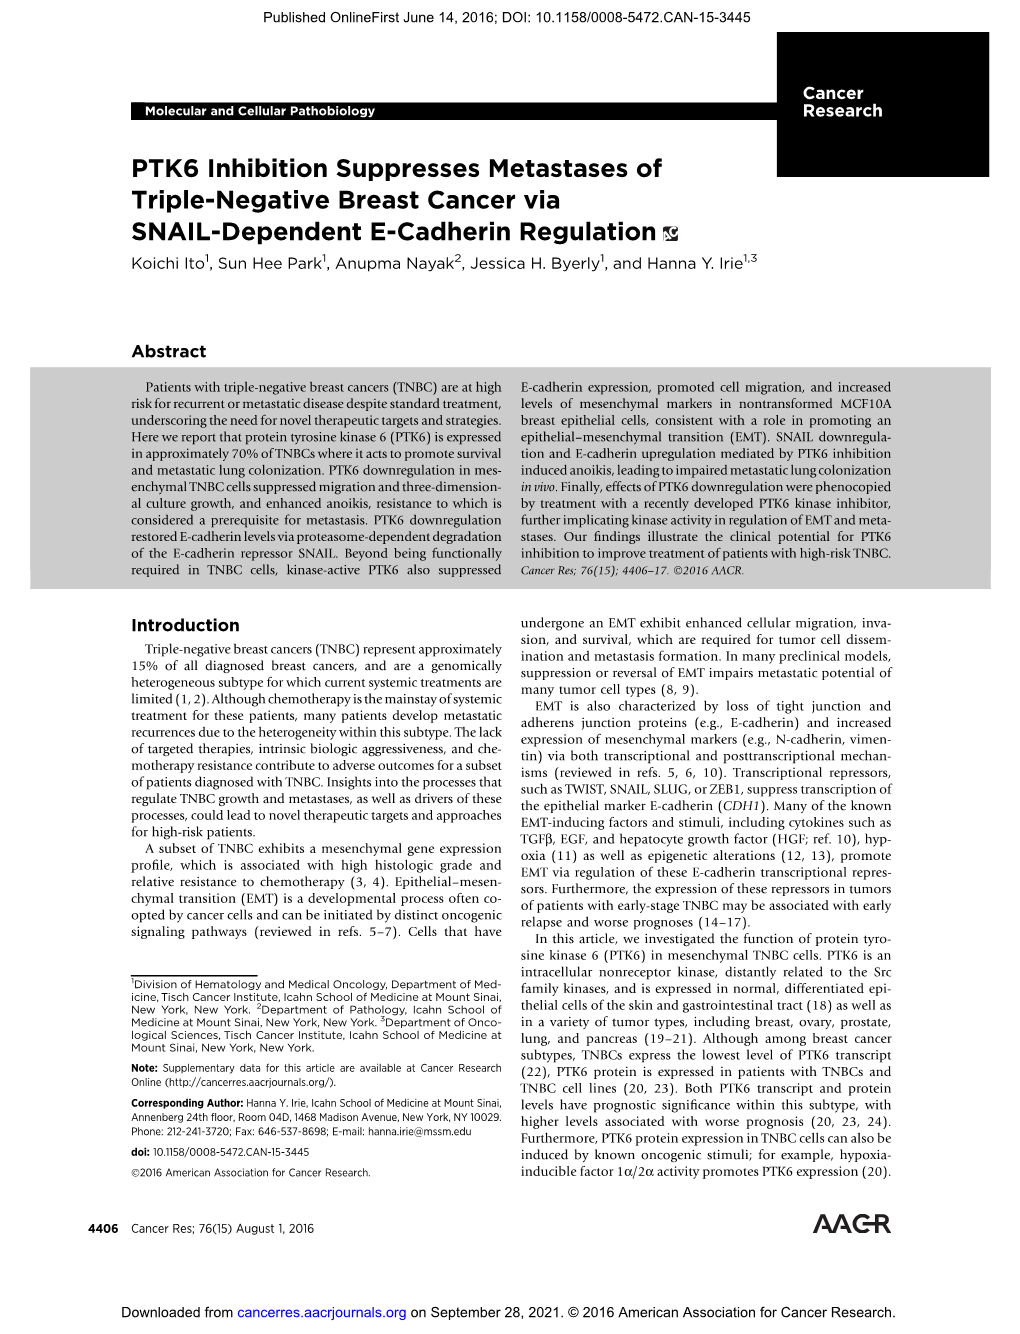 PTK6 Inhibition Suppresses Metastases of Triple-Negative Breast Cancer Via SNAIL-Dependent E-Cadherin Regulation Koichi Ito1, Sun Hee Park1, Anupma Nayak2, Jessica H